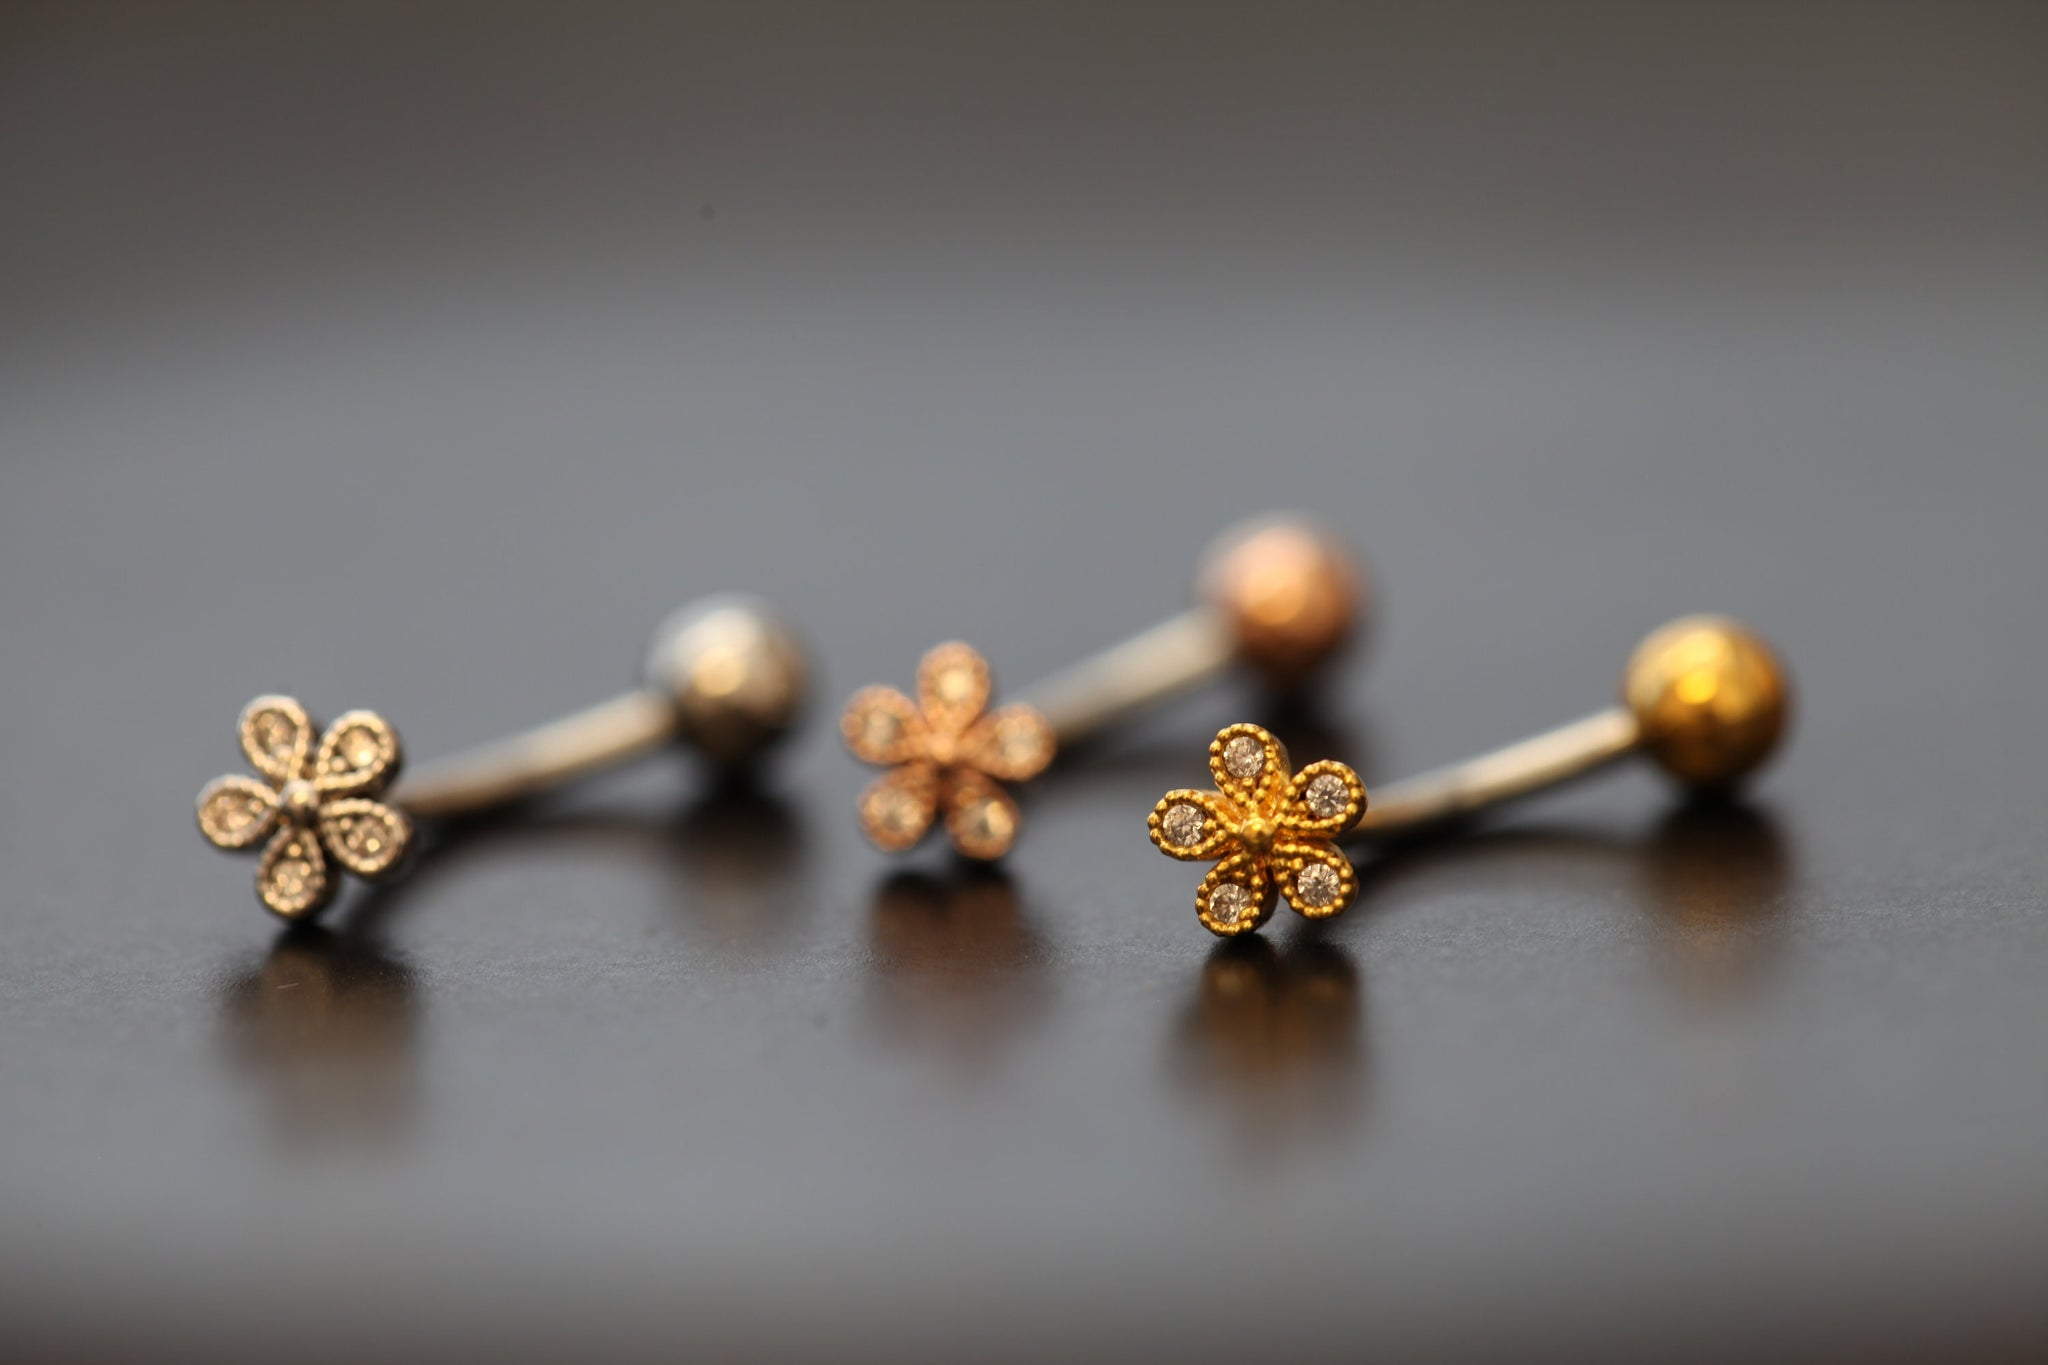 Rose Gold Cross Gemstone Belly Button Piercing Ring 14g 7/16